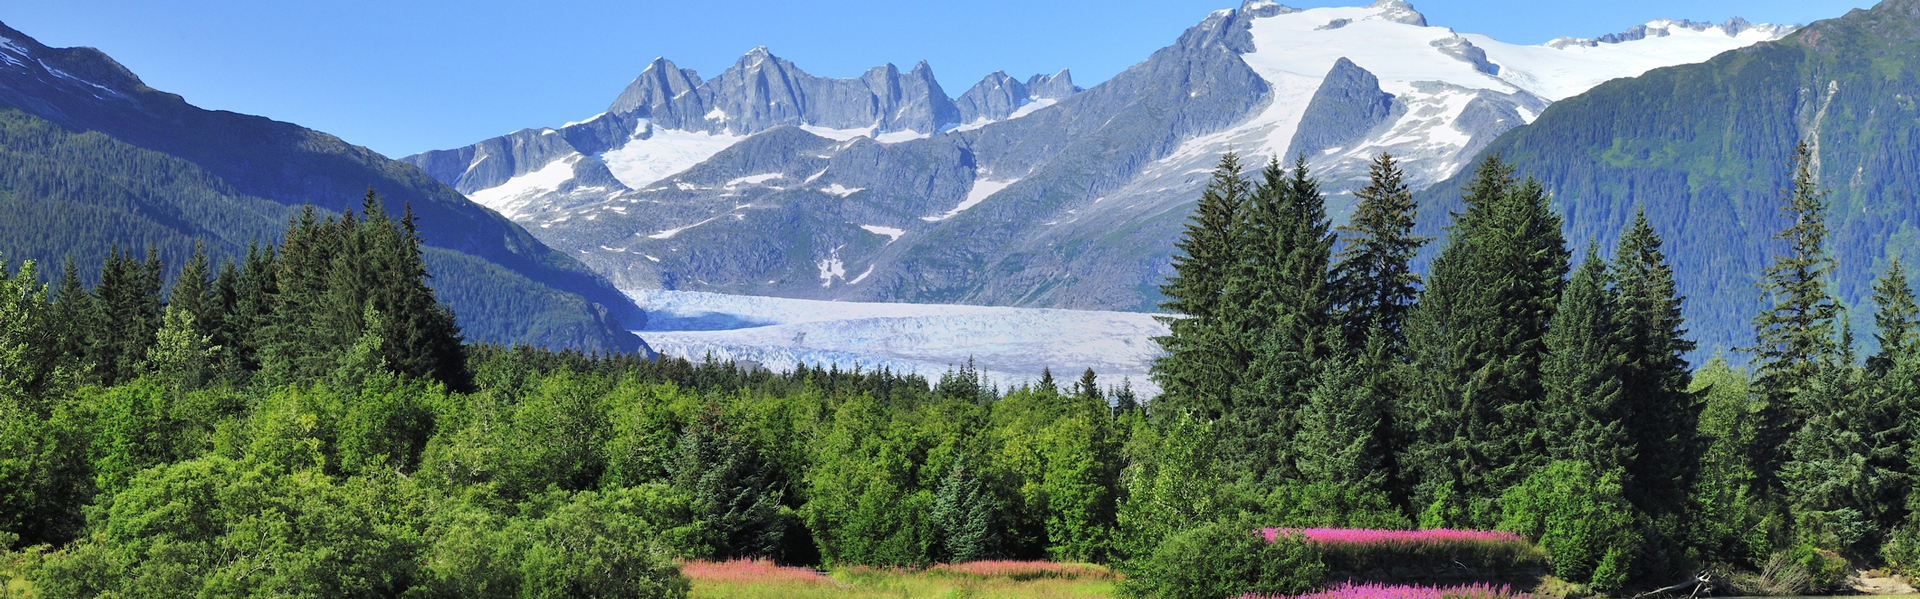 Alaska Self Drive Road Trips | Alaska Driving Tours